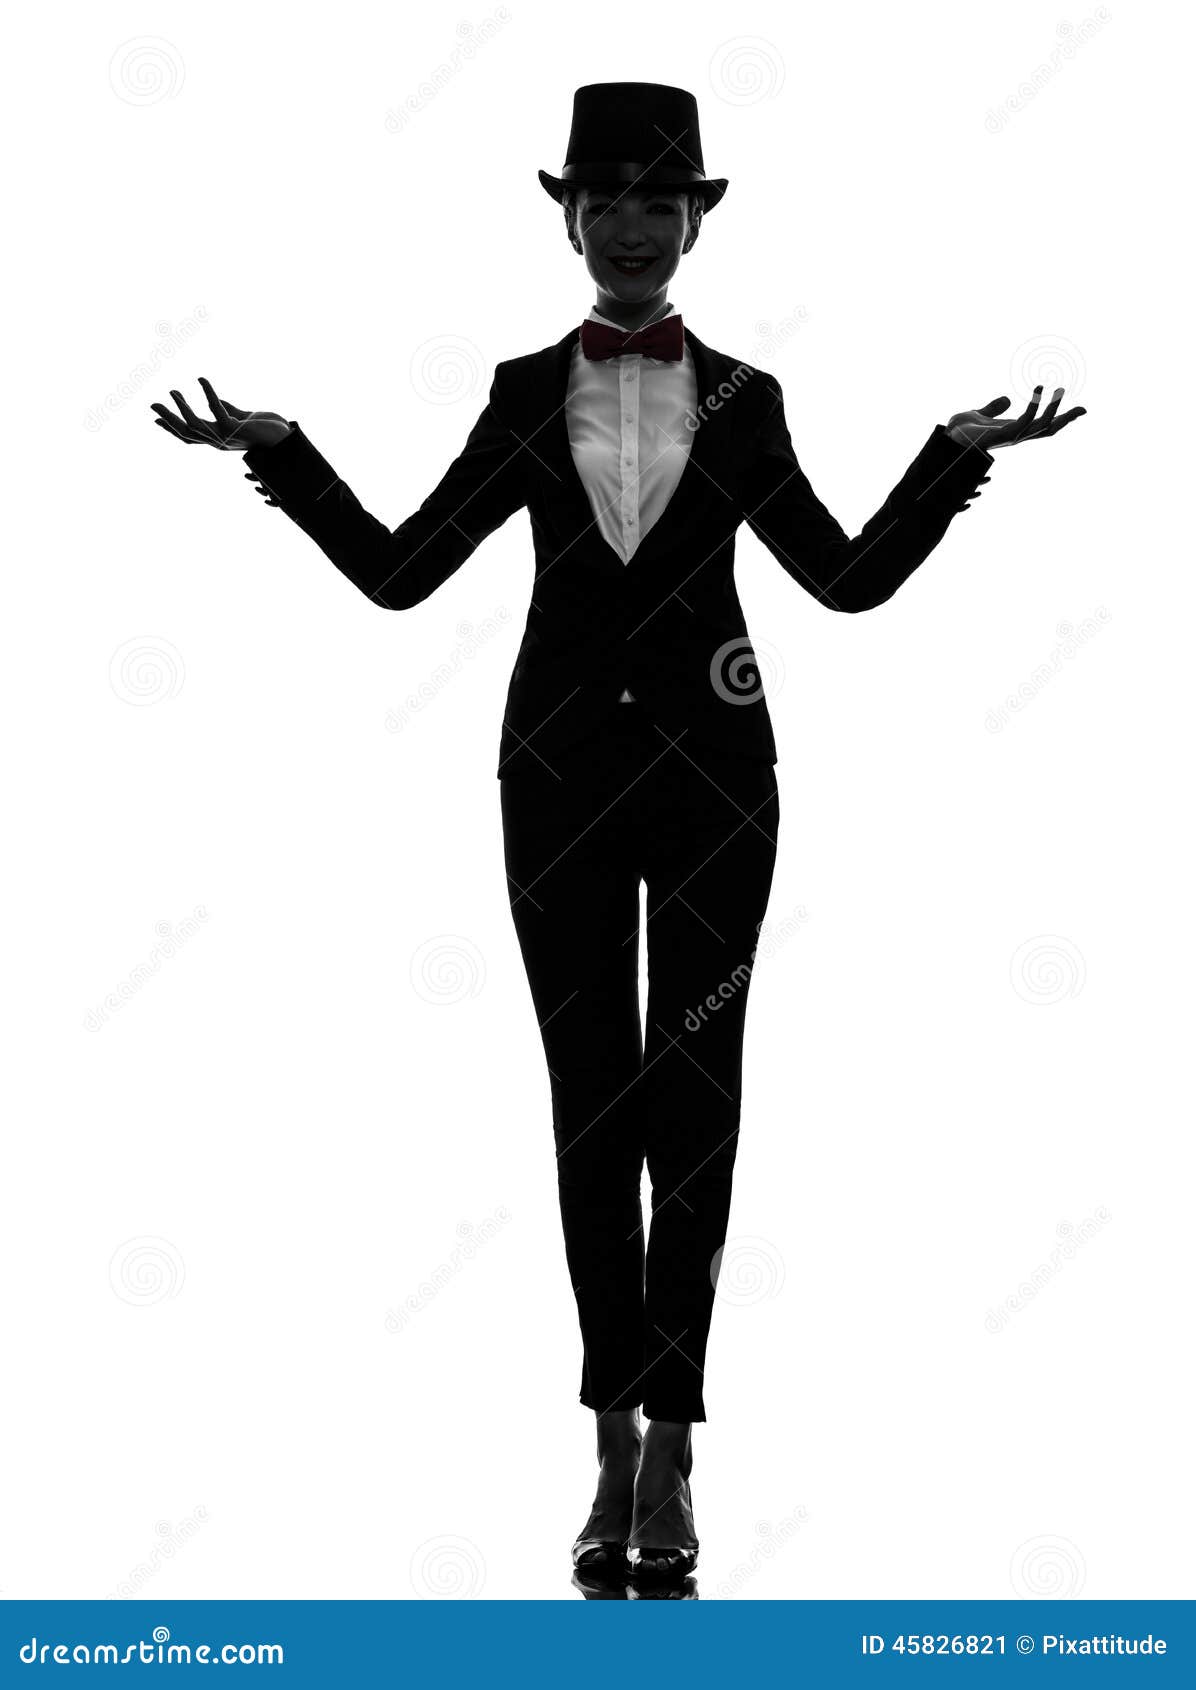 woman master of ceremonies presenter silhouette